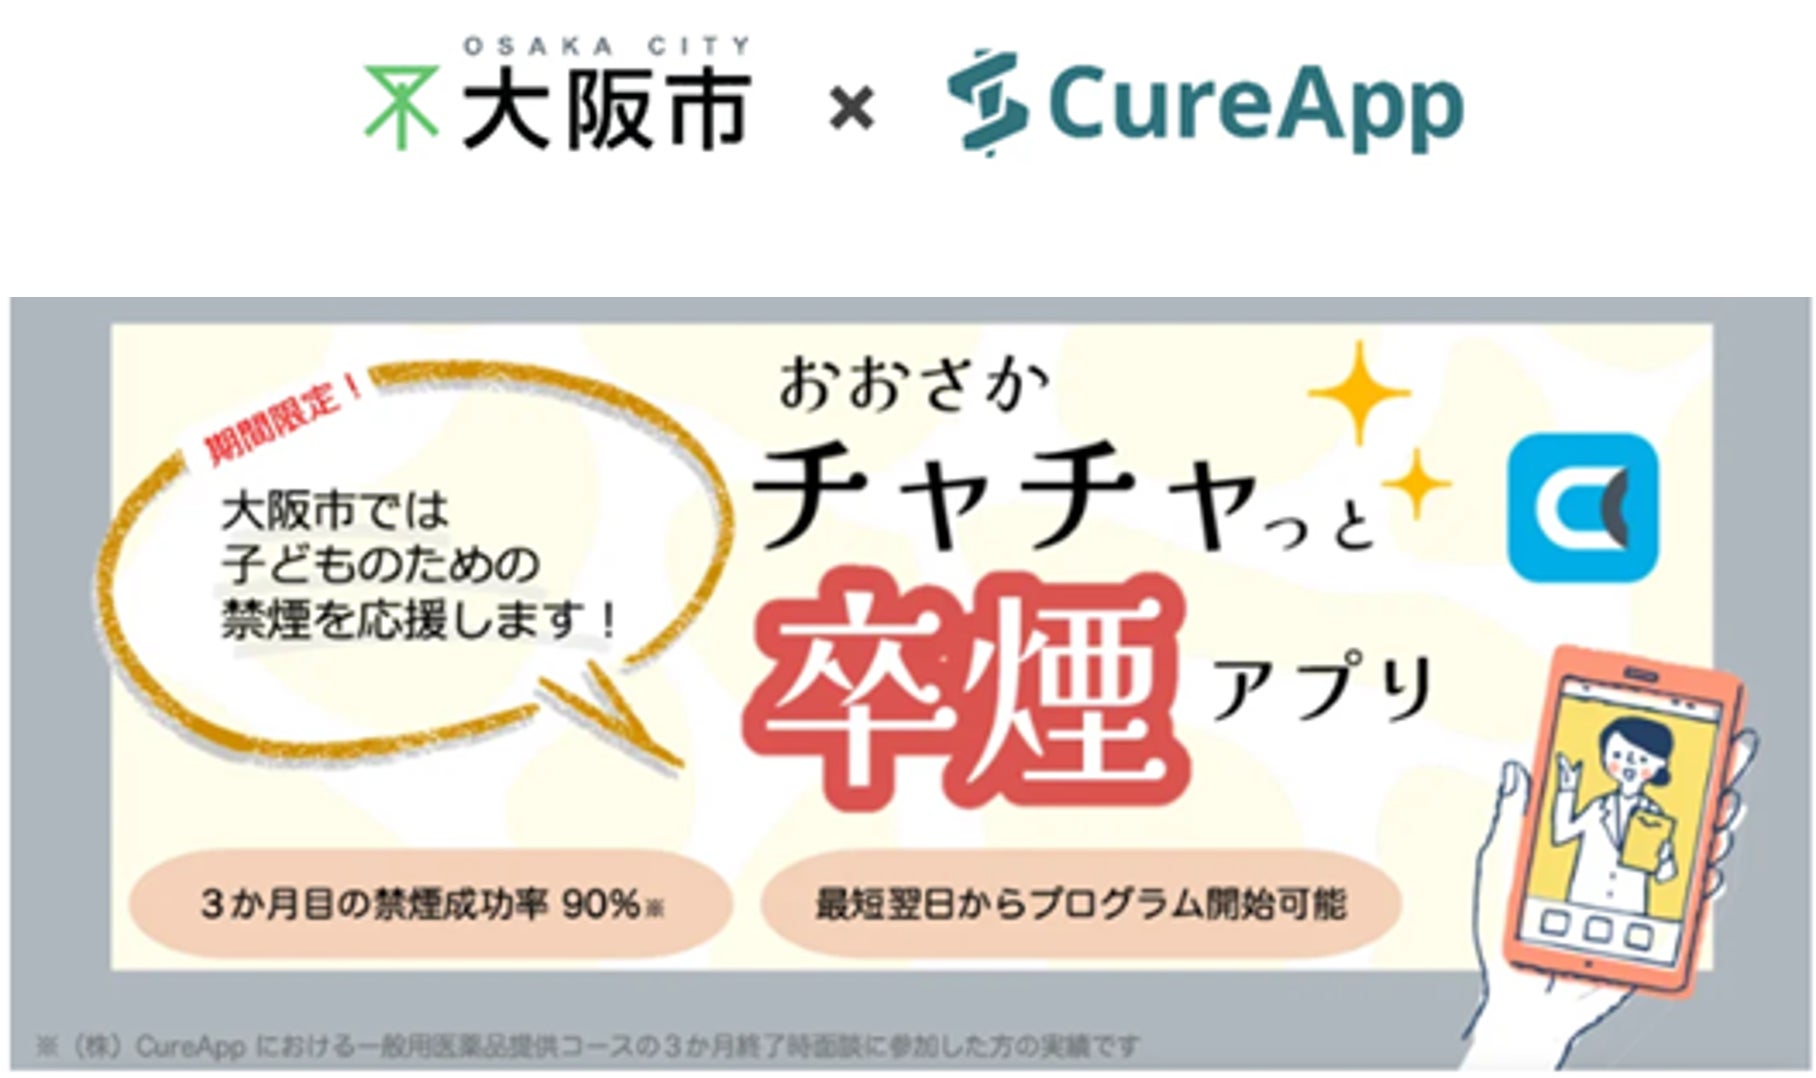 CureAppのオンライン禁煙プログラム「ascure卒煙」導入から半年大阪市の禁煙支援事業「おおさかチャチャっと...